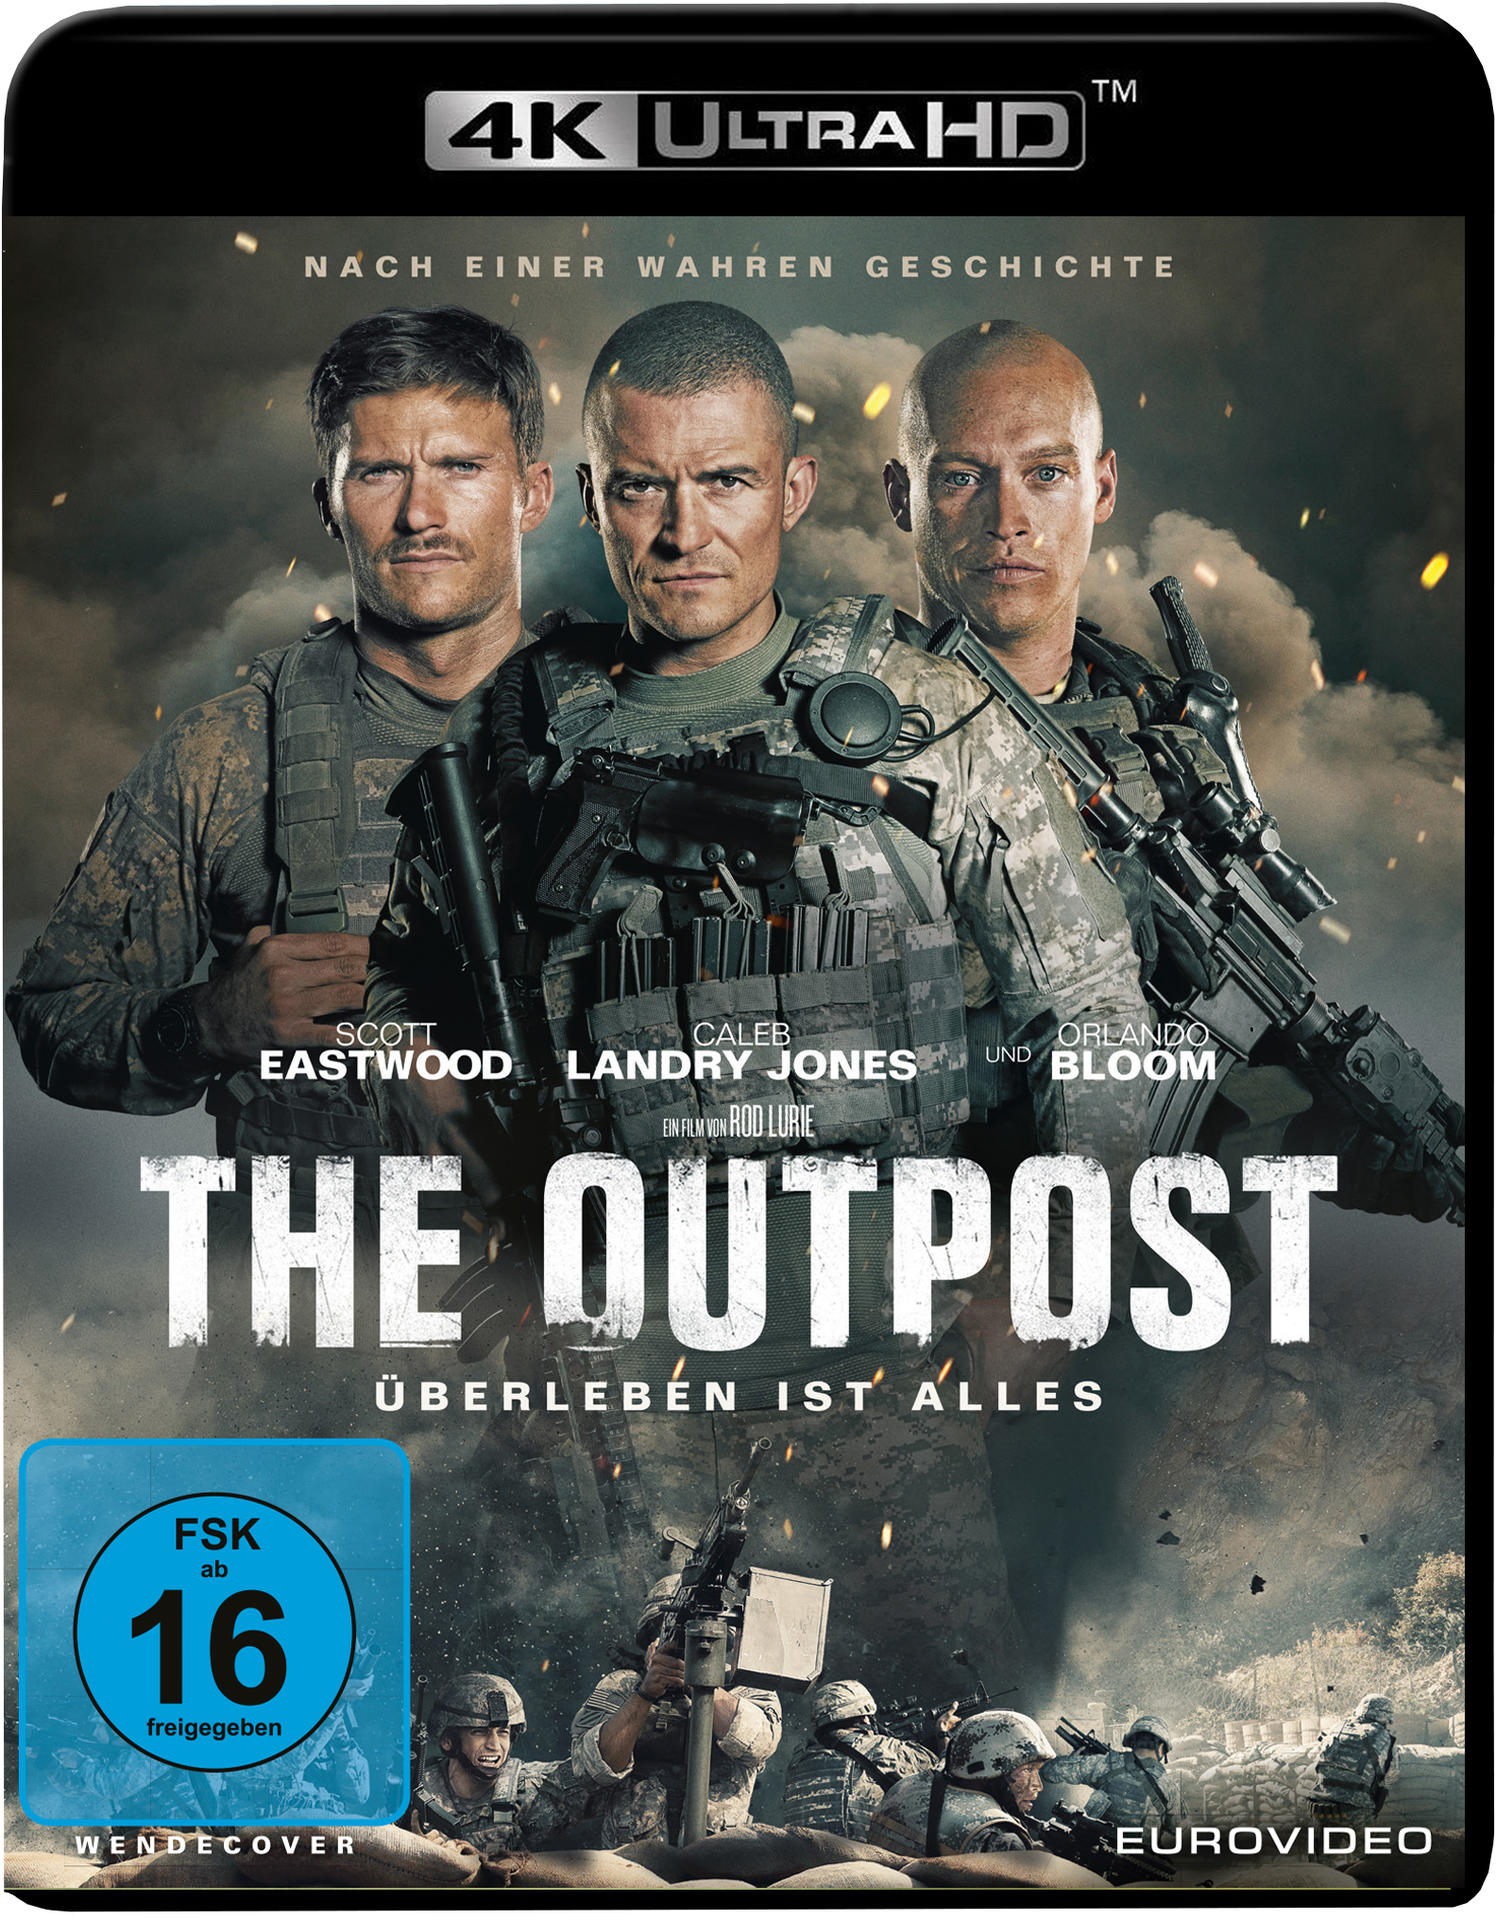 The Outpost - Überleben ist Blu-ray 4K Ultra alles HD